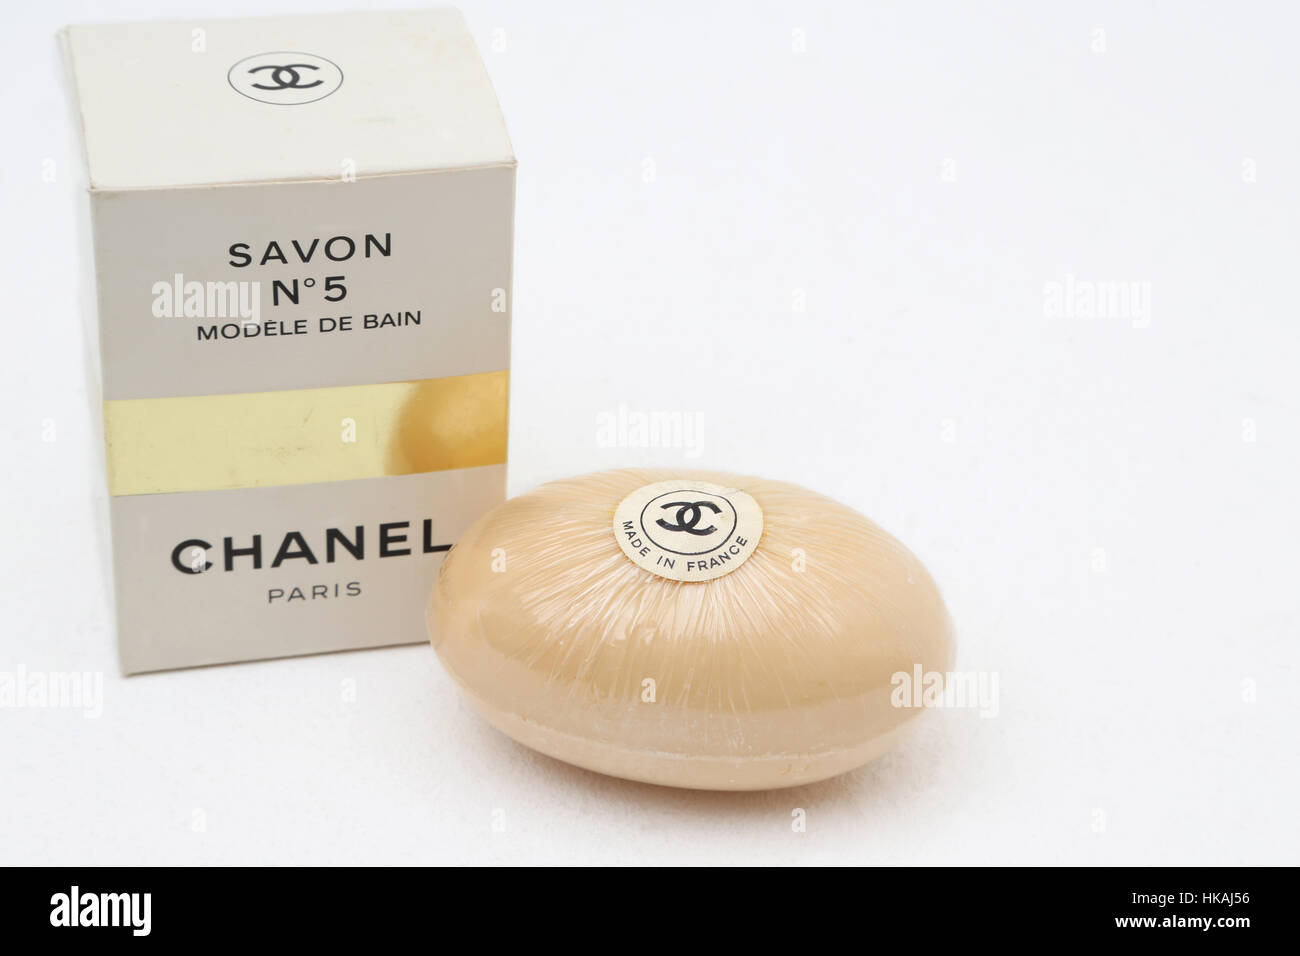 chanel bath soap